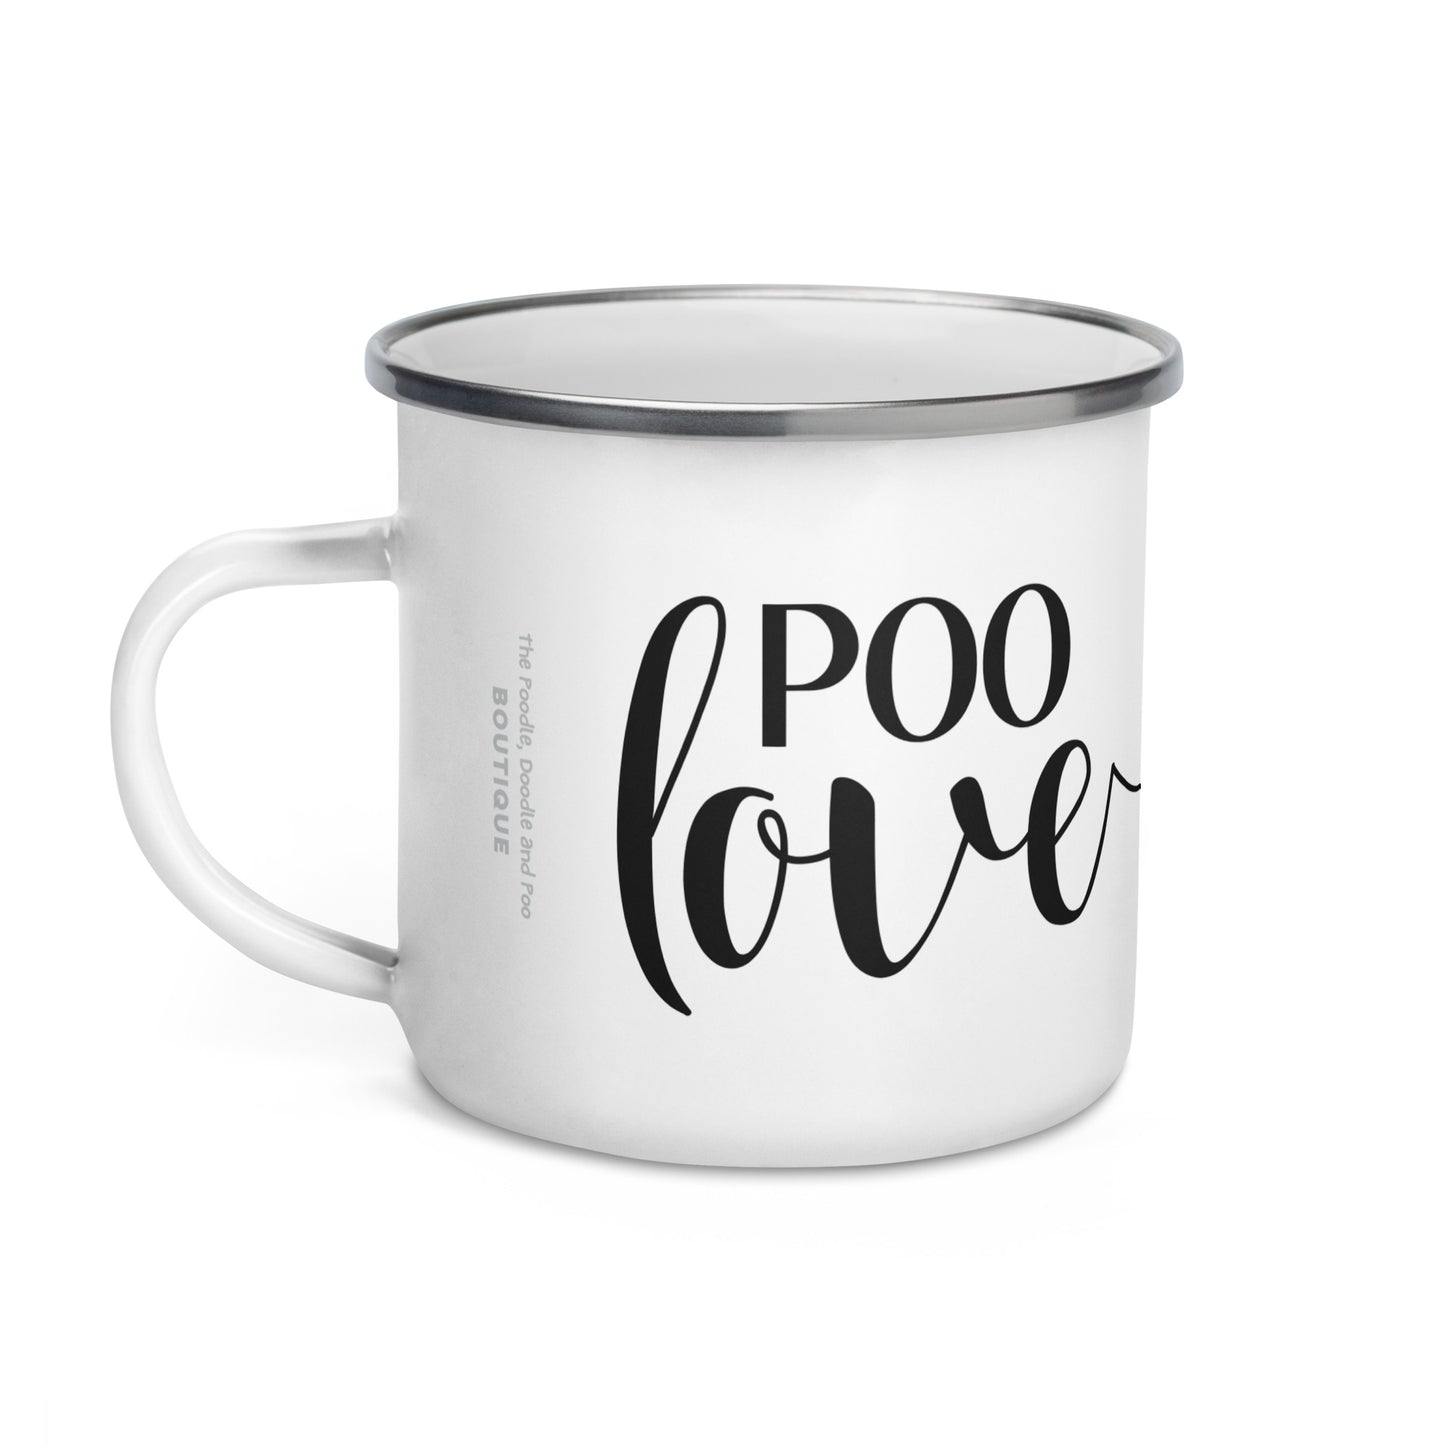 "Poo Love" Enamel Mug - white